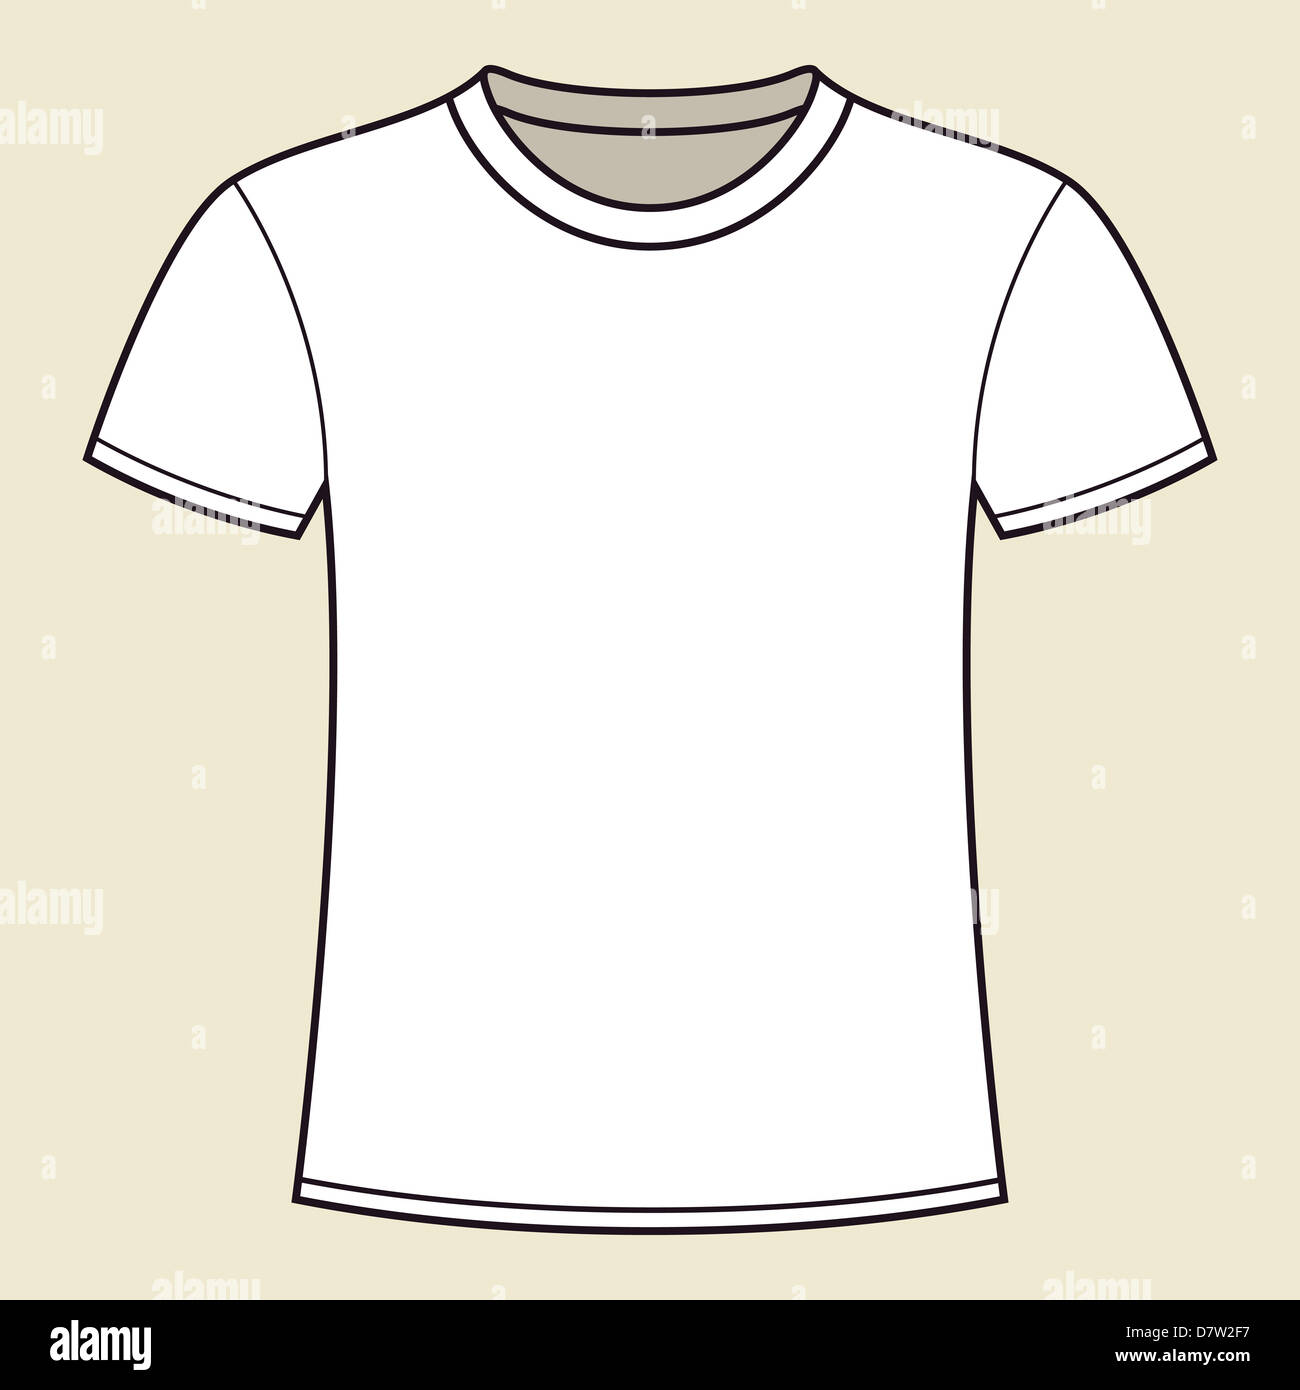 Blank white t-shirt template Stock Photo - Alamy